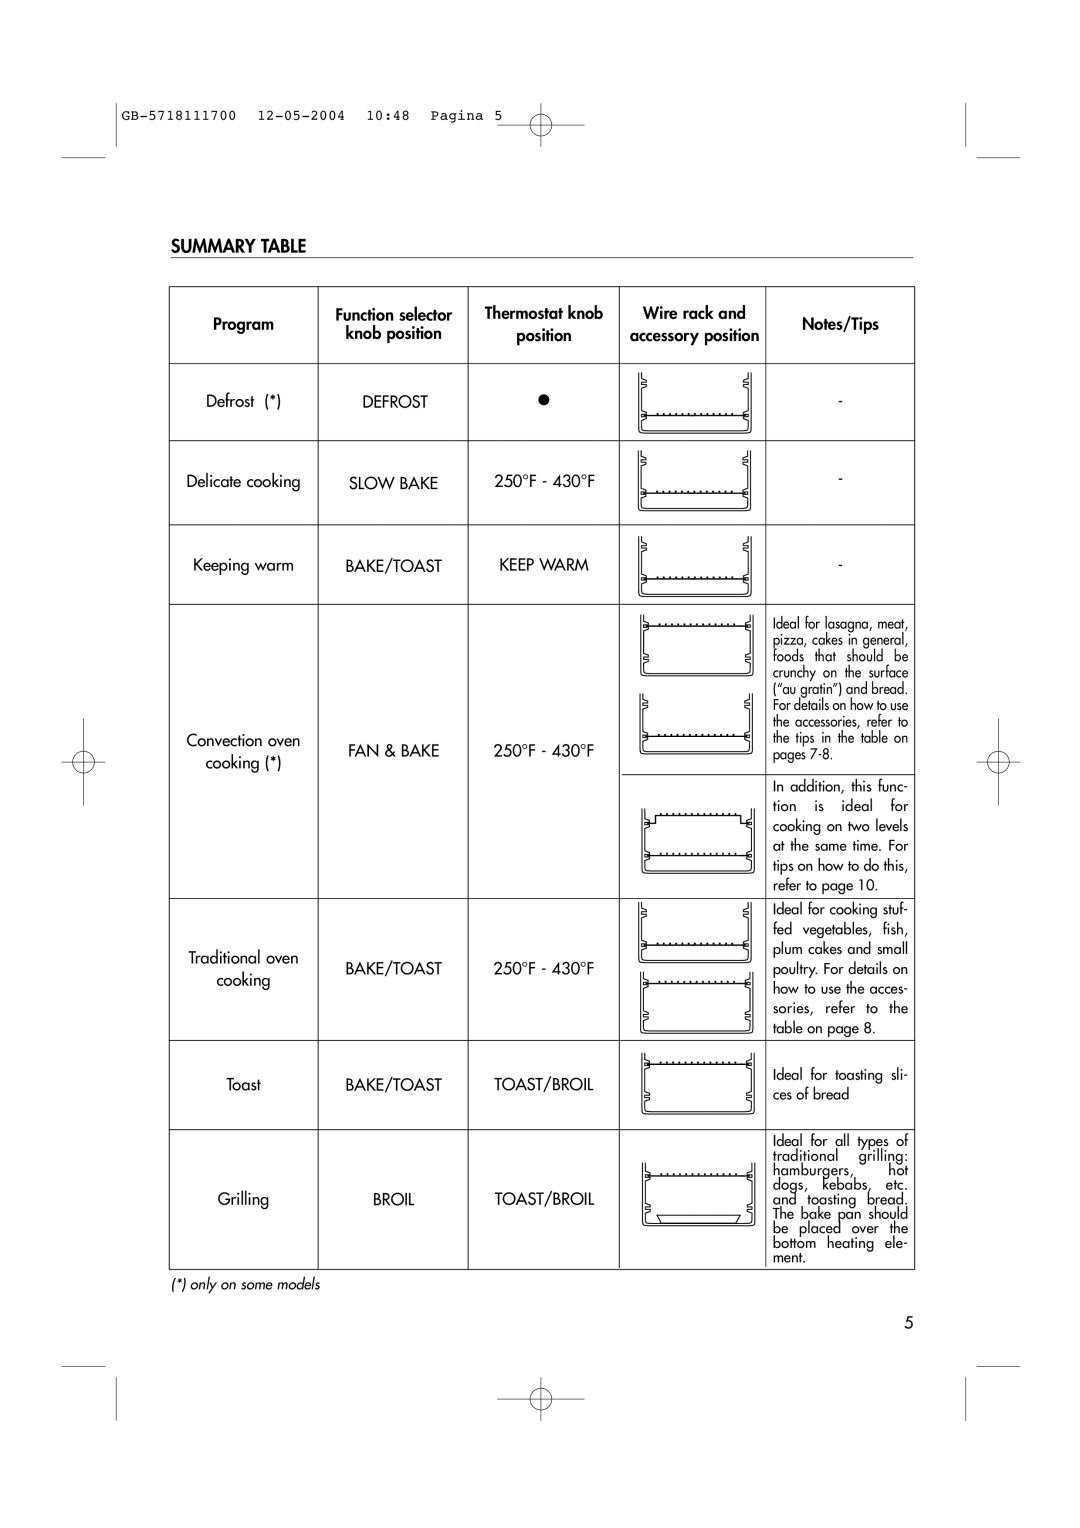 DeLonghi EO1200 Series manual Summary Table 